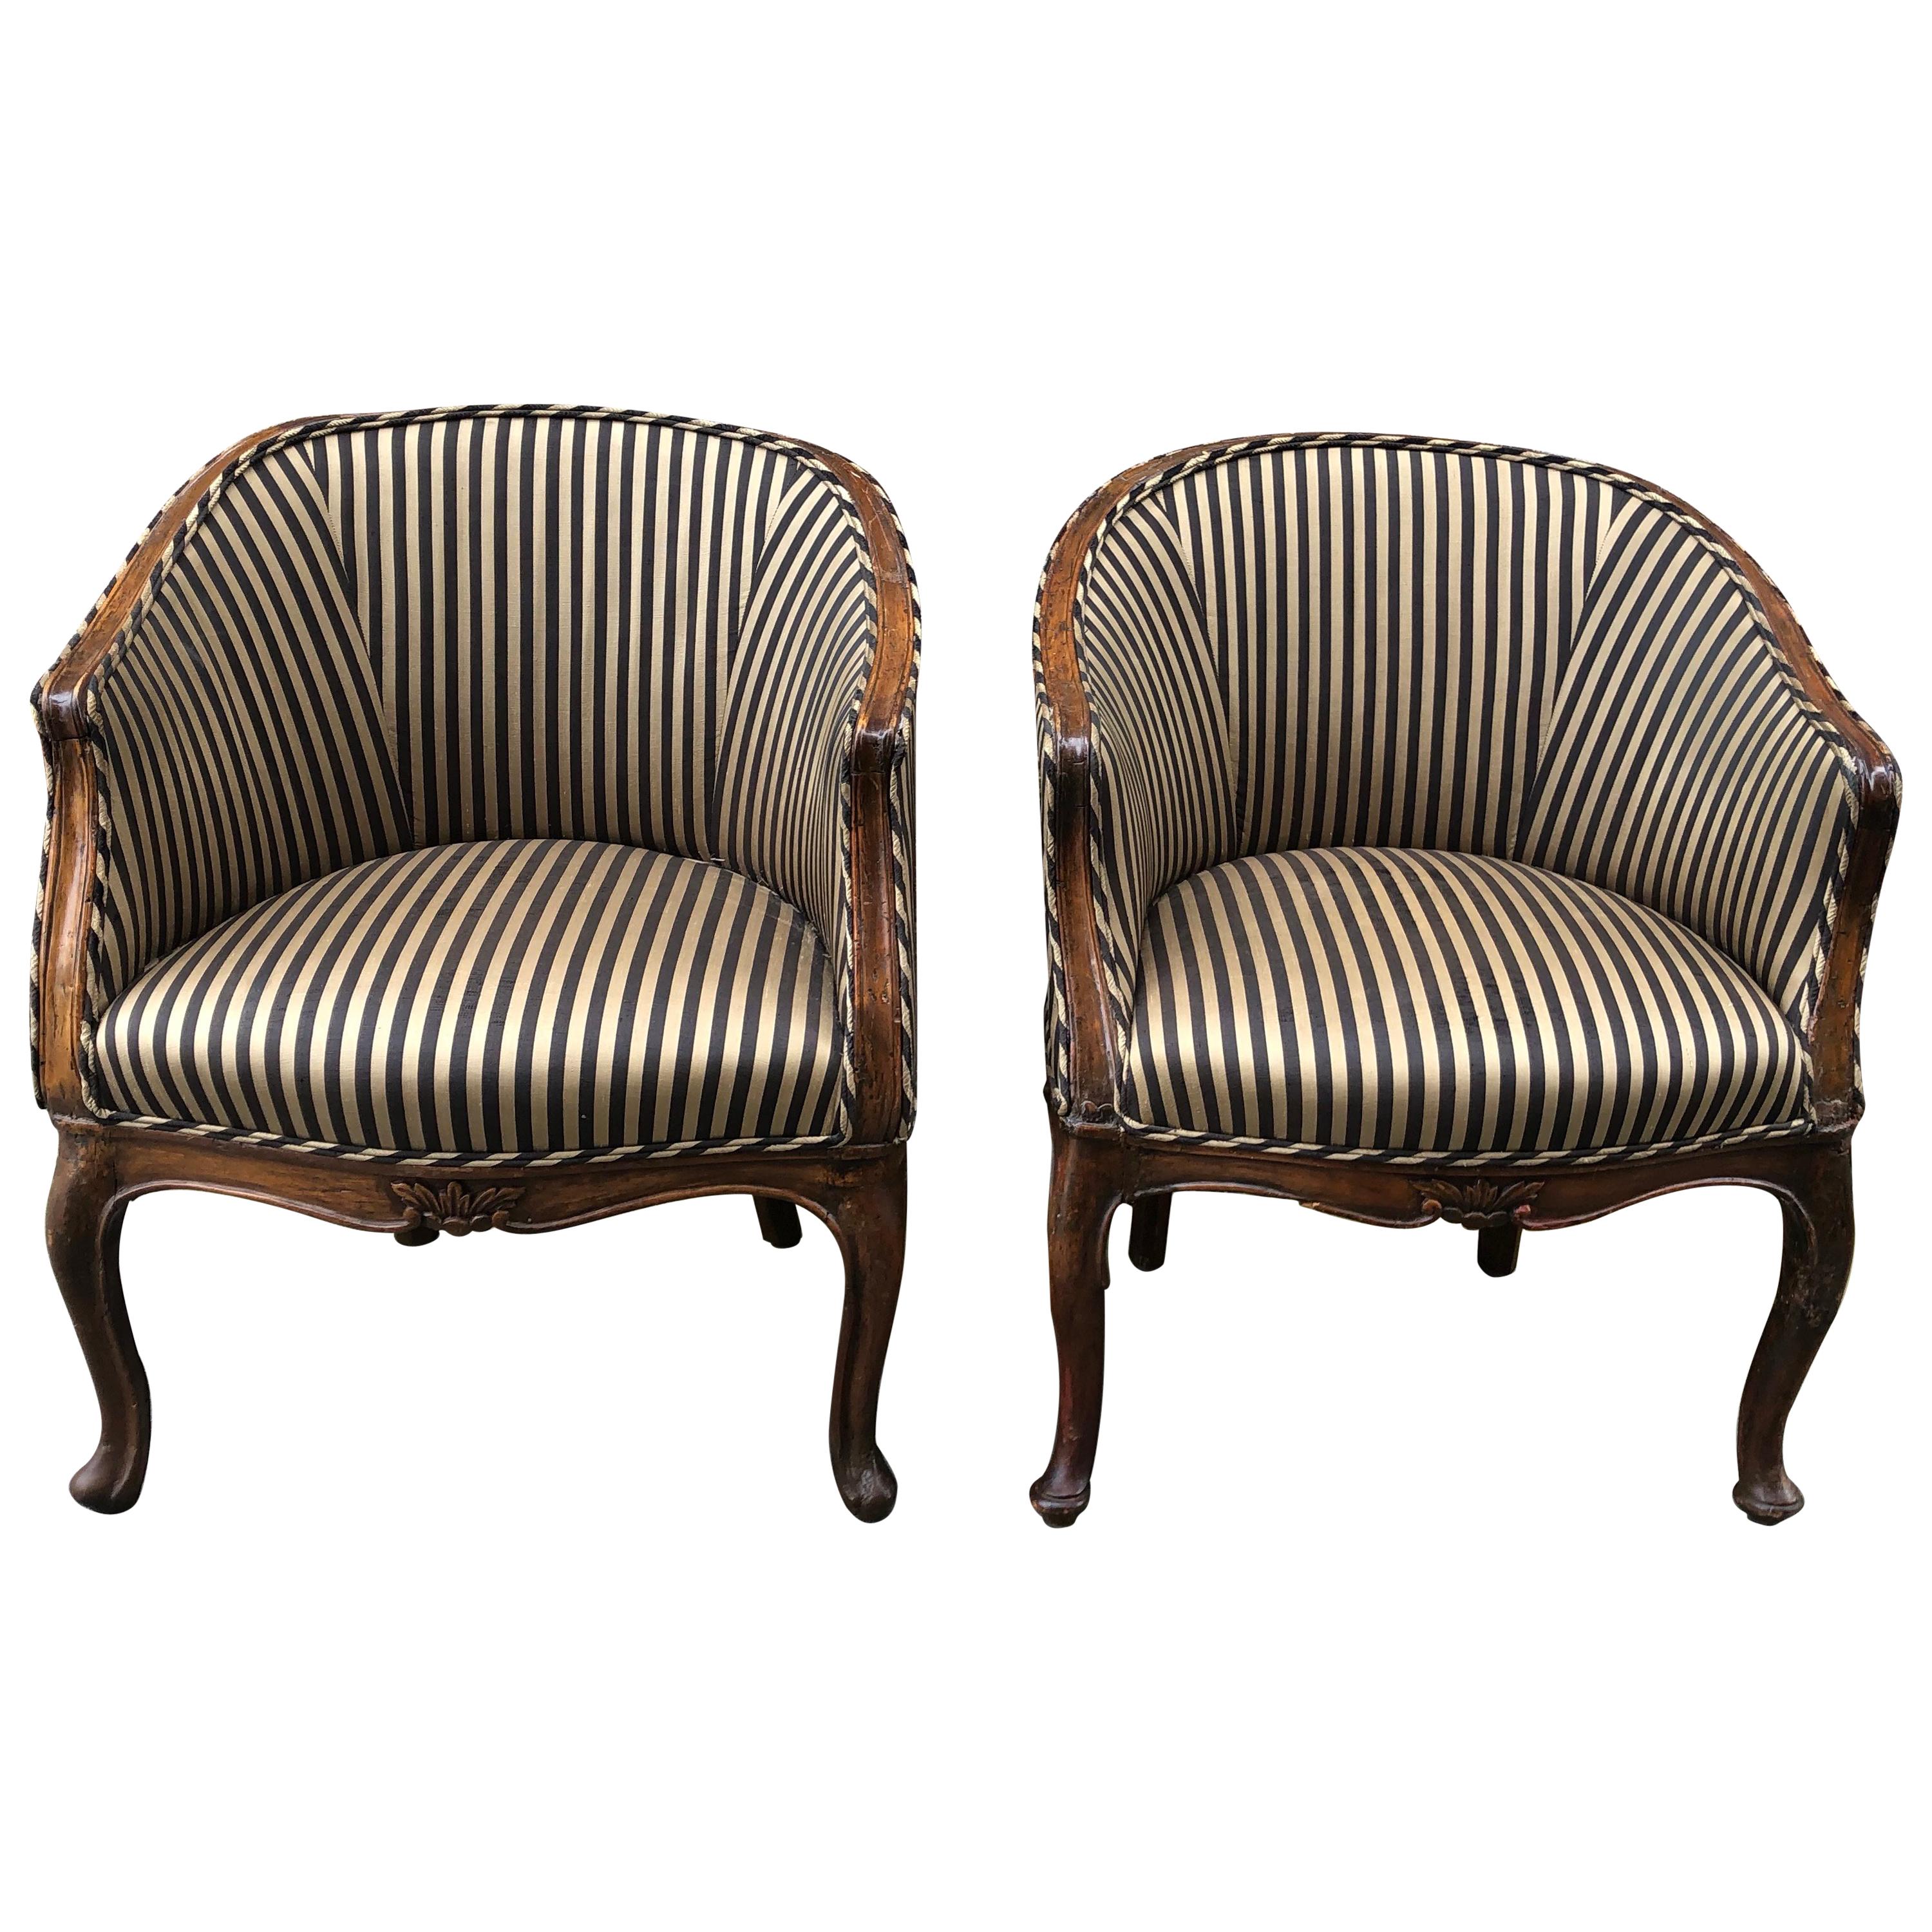 Pair of Late 19th Century Italian Walnut Occasional Chairs